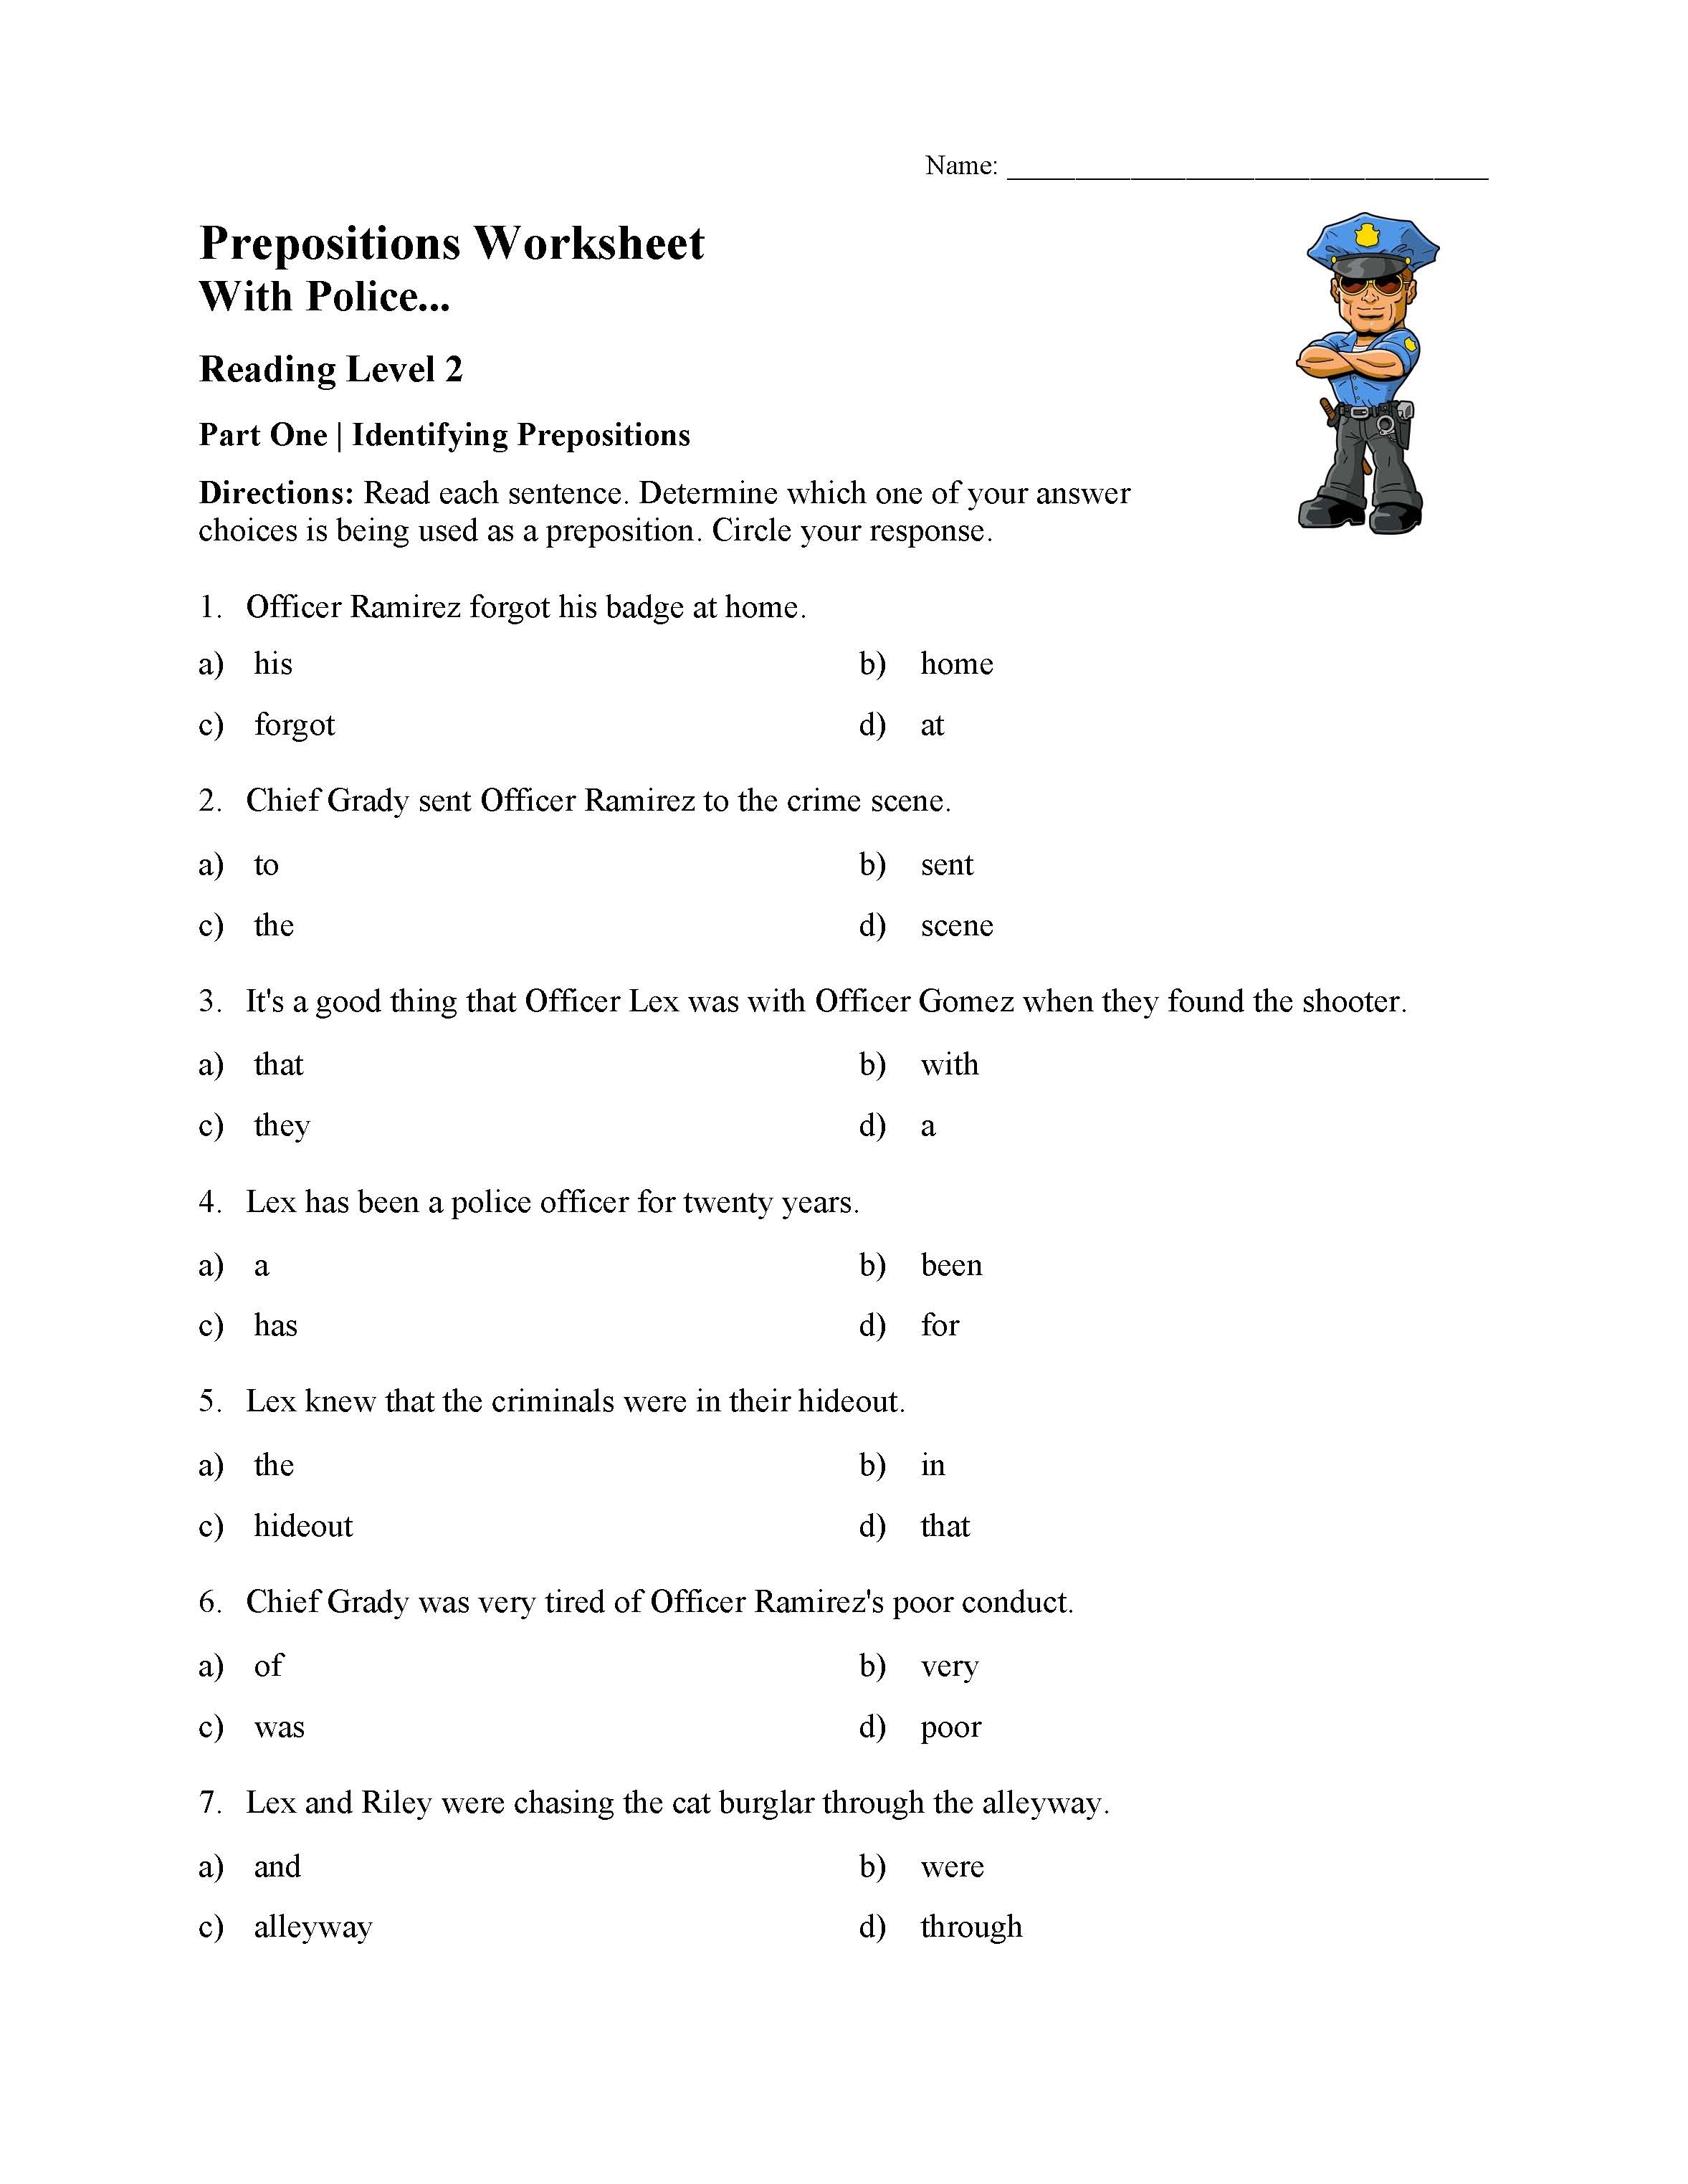 preposition-worksheet-1-reading-level-2-preview